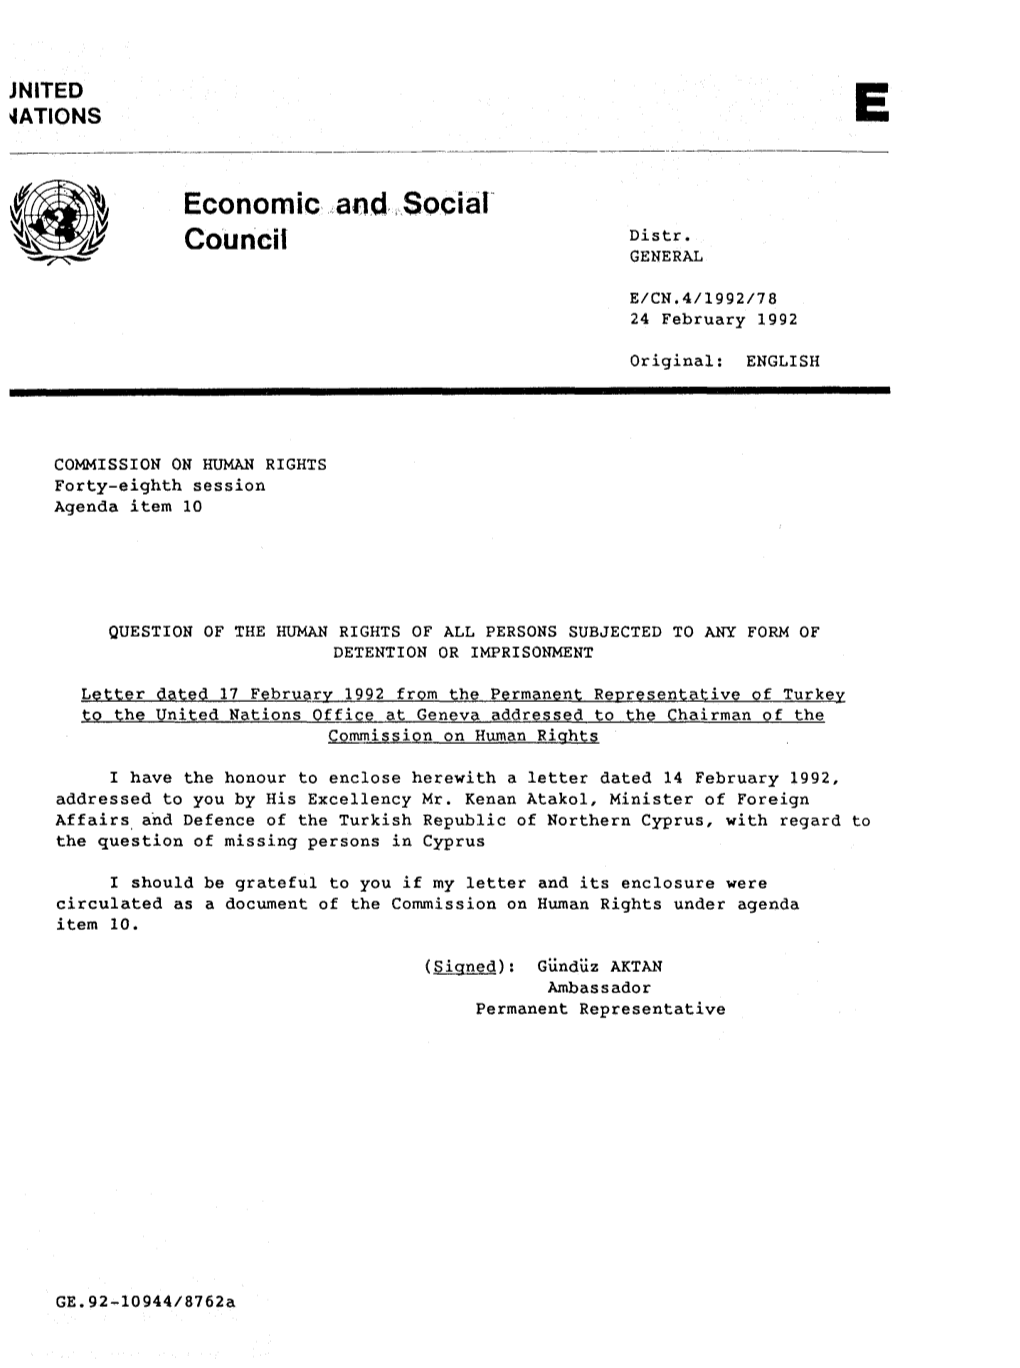 Economic and Social Council Distr- GENERAL E/CN.4/1992/78 24 February 1992